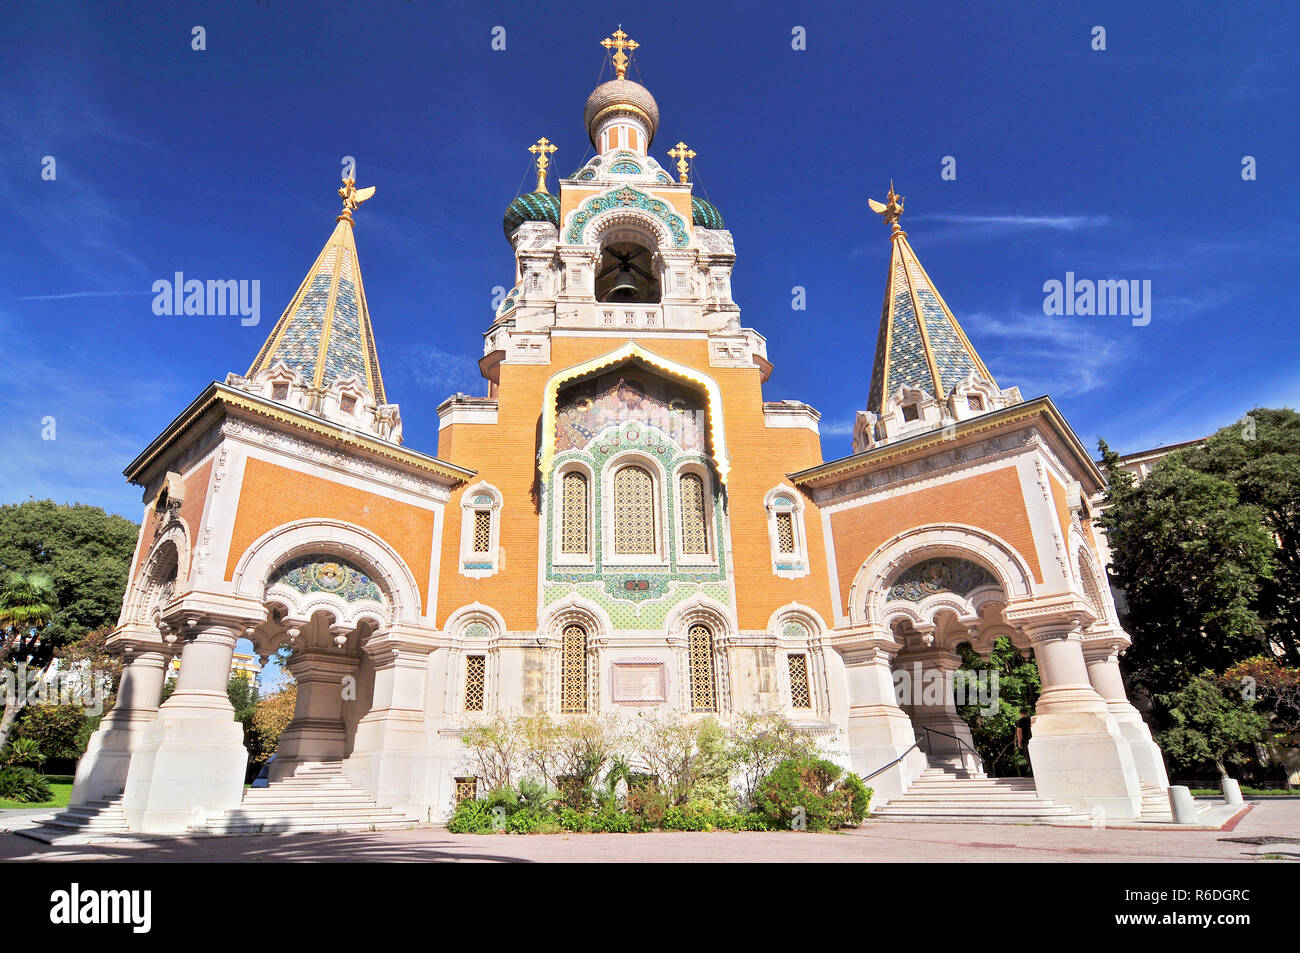 Cathedrale Orthodoxe Russe Saint Nicolas De Nice, The Russian Orthodox Cathedral In Nice, France Stock Photo